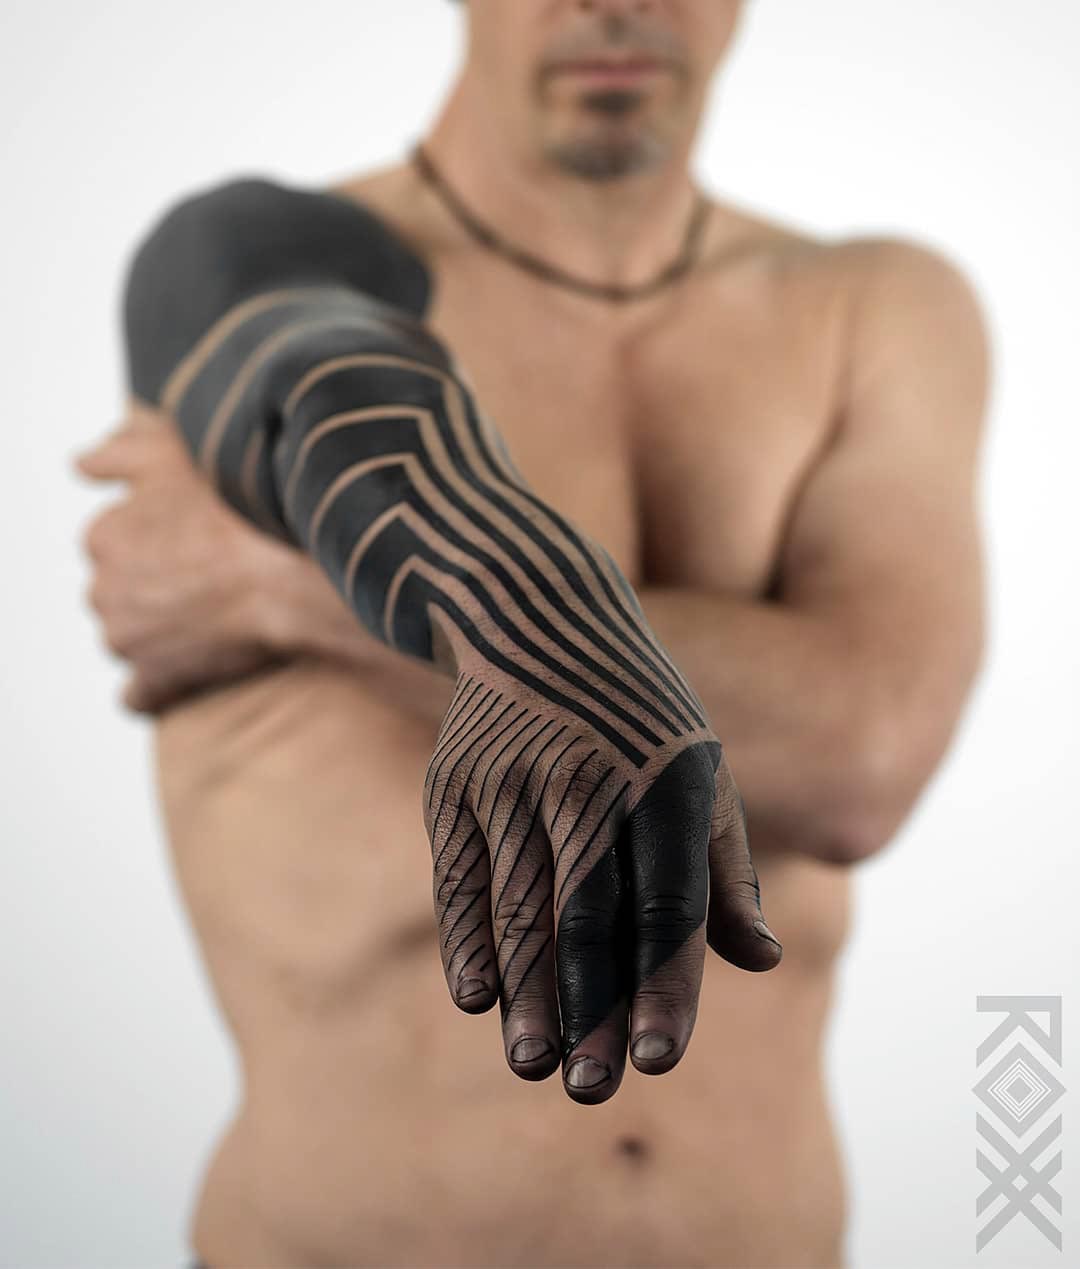 Blackwork tattoos - Best Tattoo Ideas Gallery